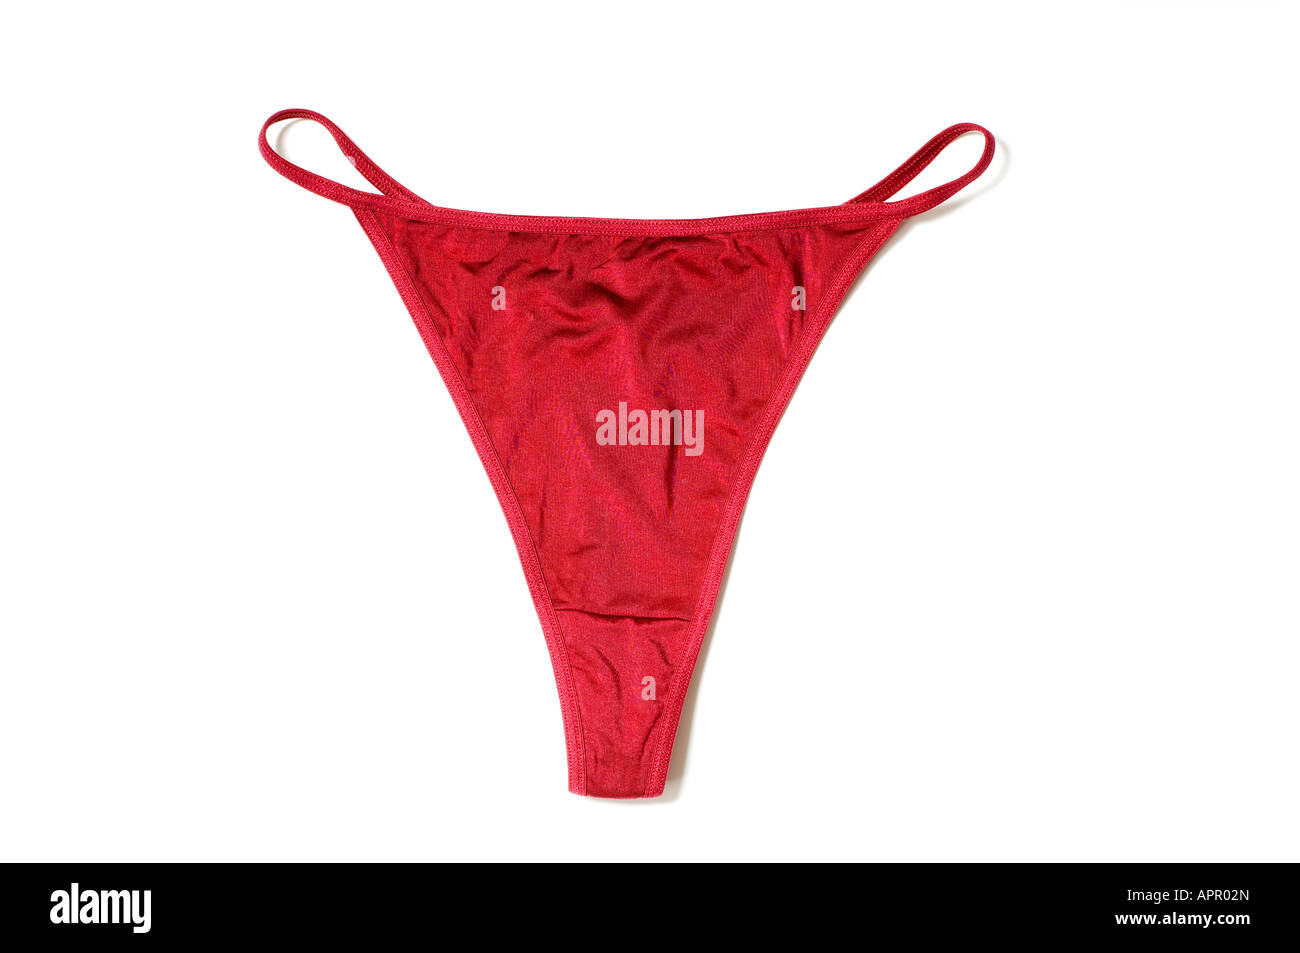 Red tanga knickers underwear pants Stock Photo - Alamy